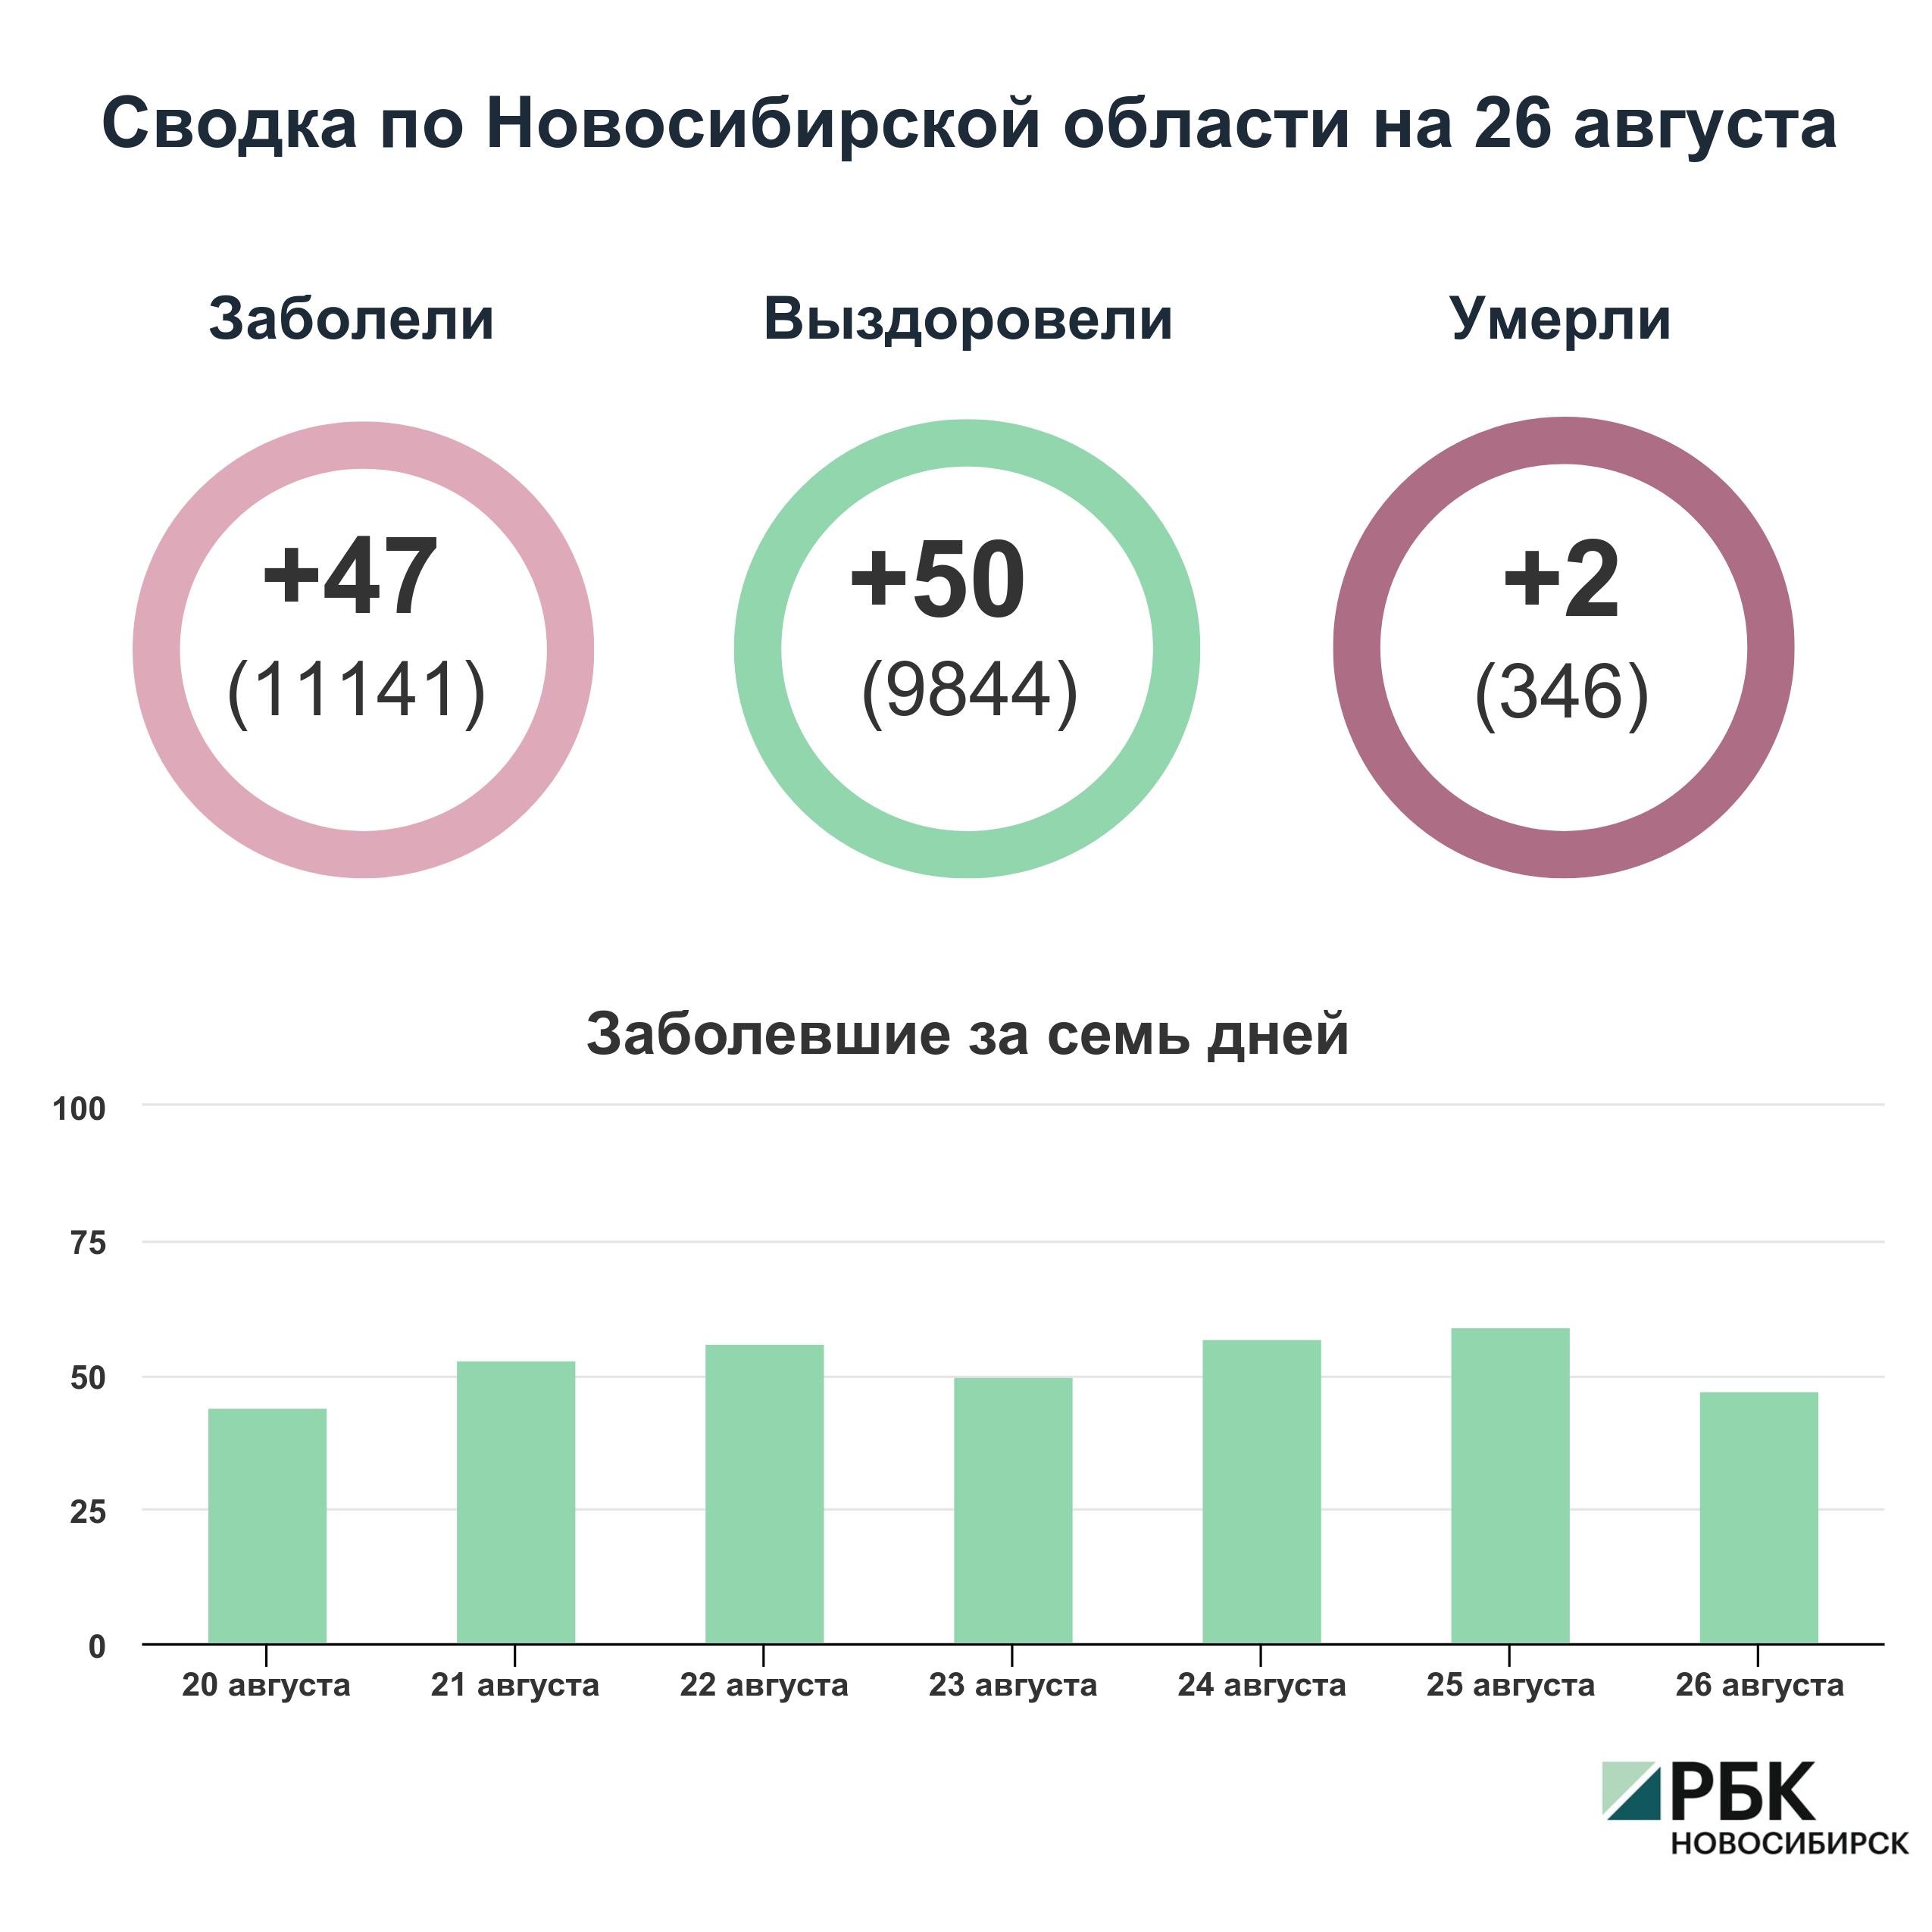 Коронавирус в Новосибирске: сводка на 26 августа